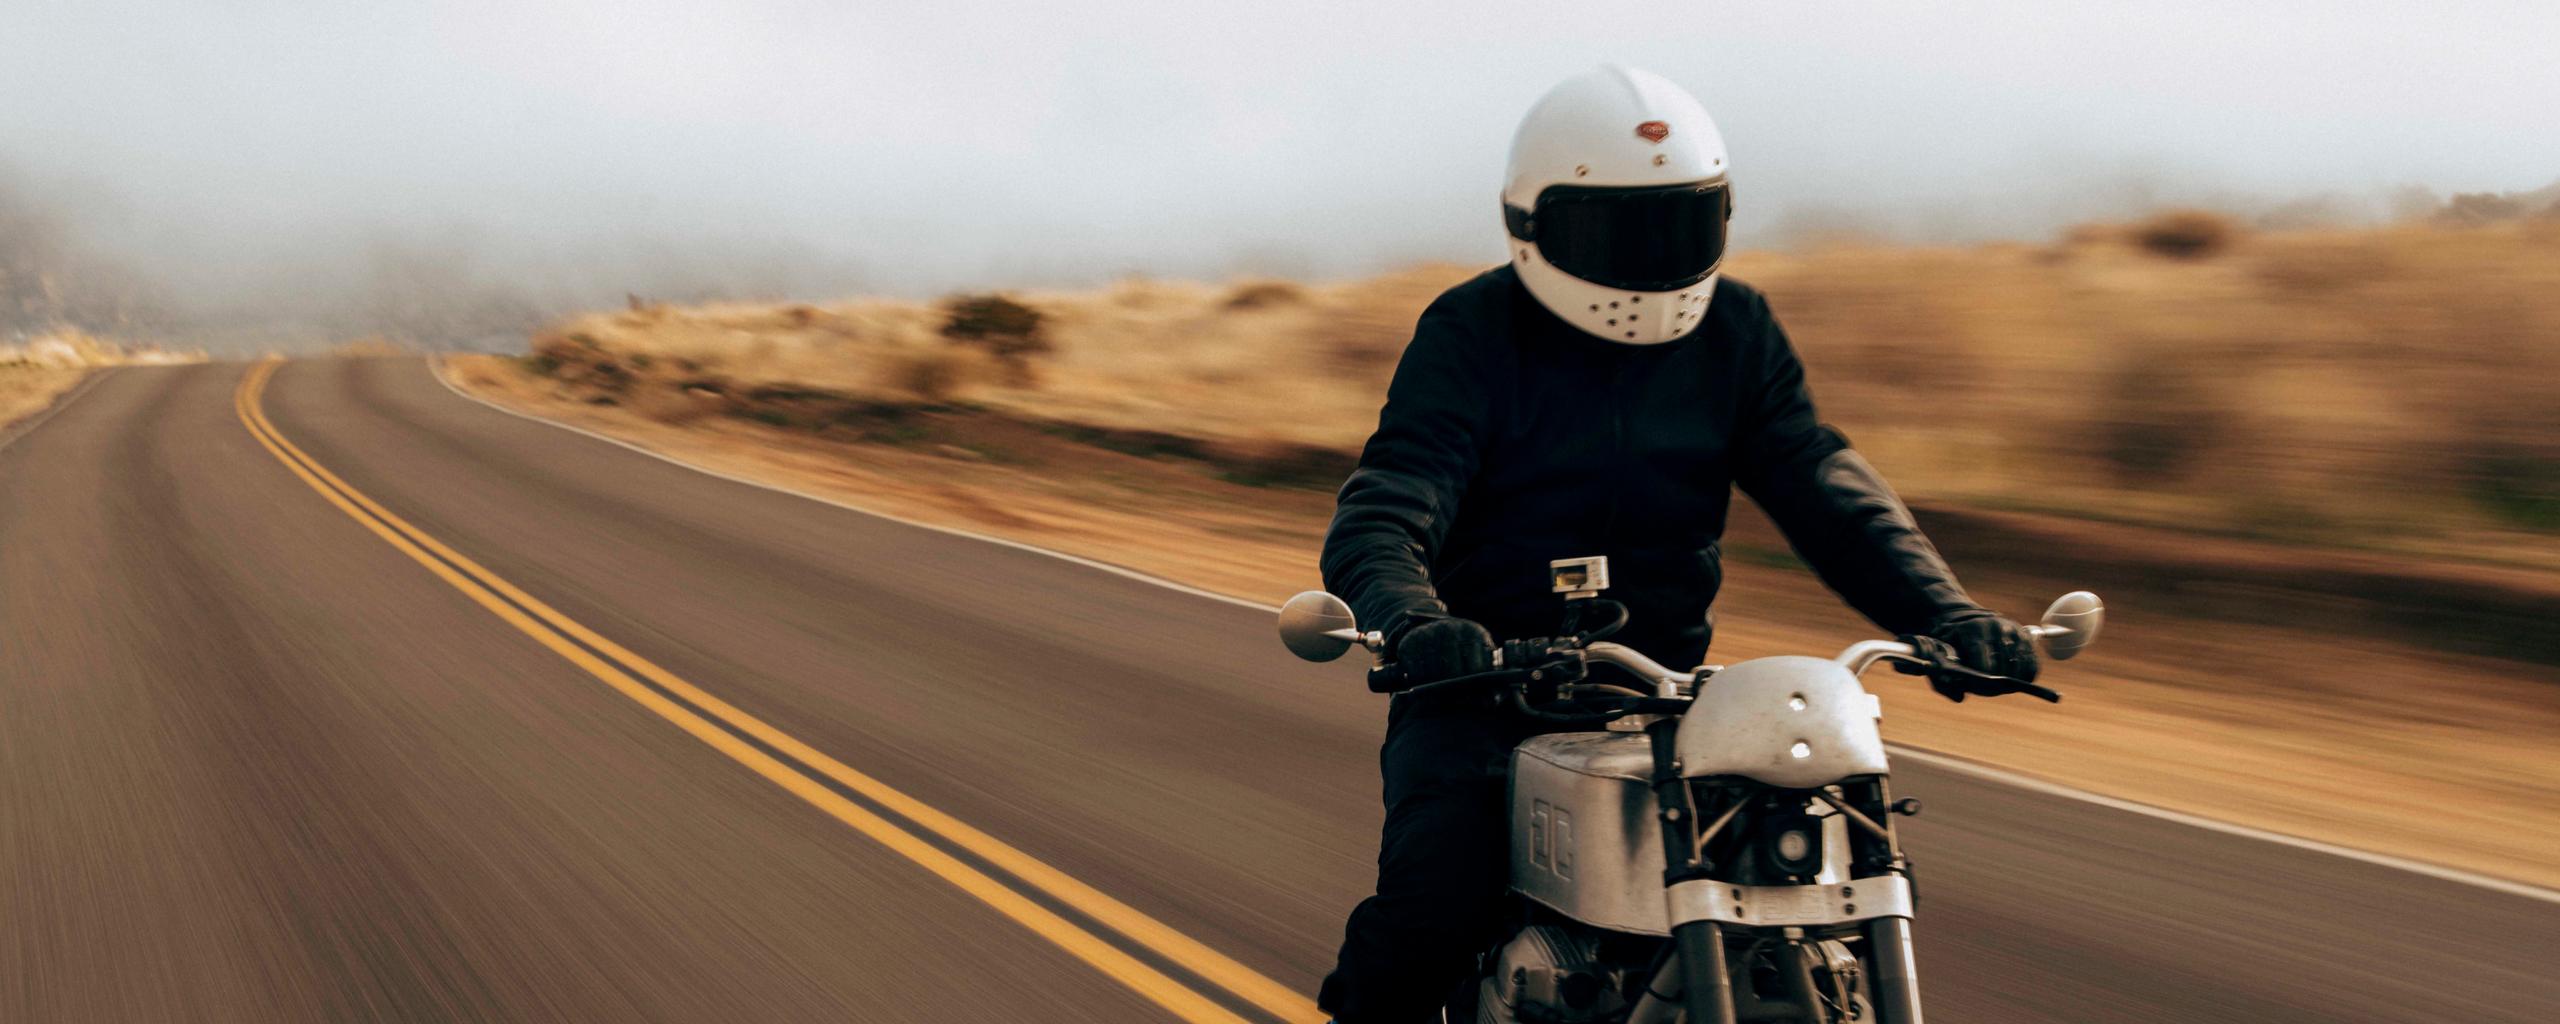 Man riding motorcycle down California road